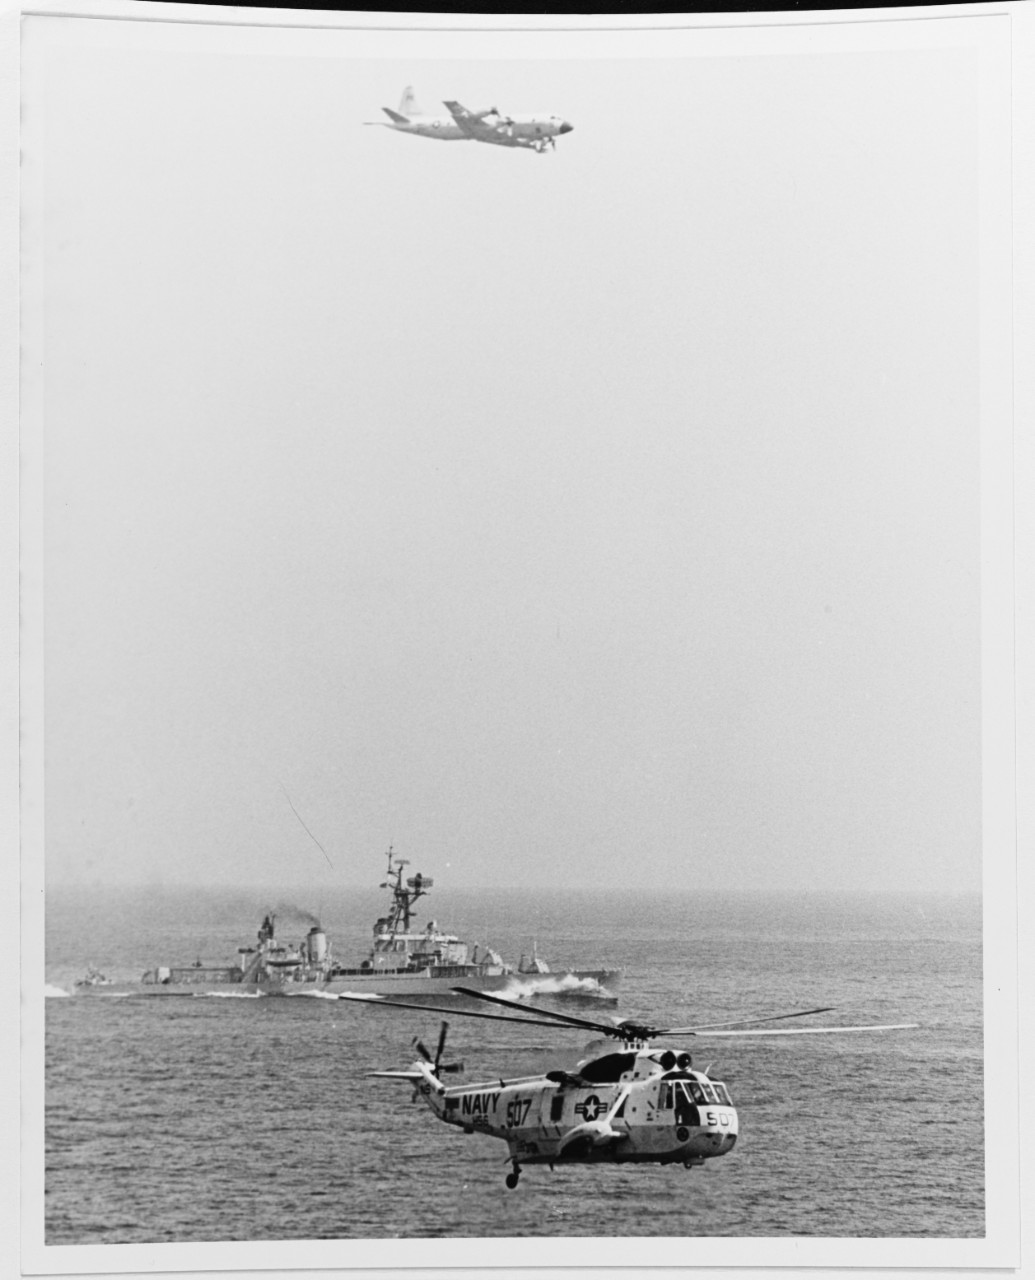 A P-3 Orion Anti-Submarine Warfare Plane, USS BUCK (DD-761), and a SH-3 Sea King Anti-Submarine Warfare Helicopter